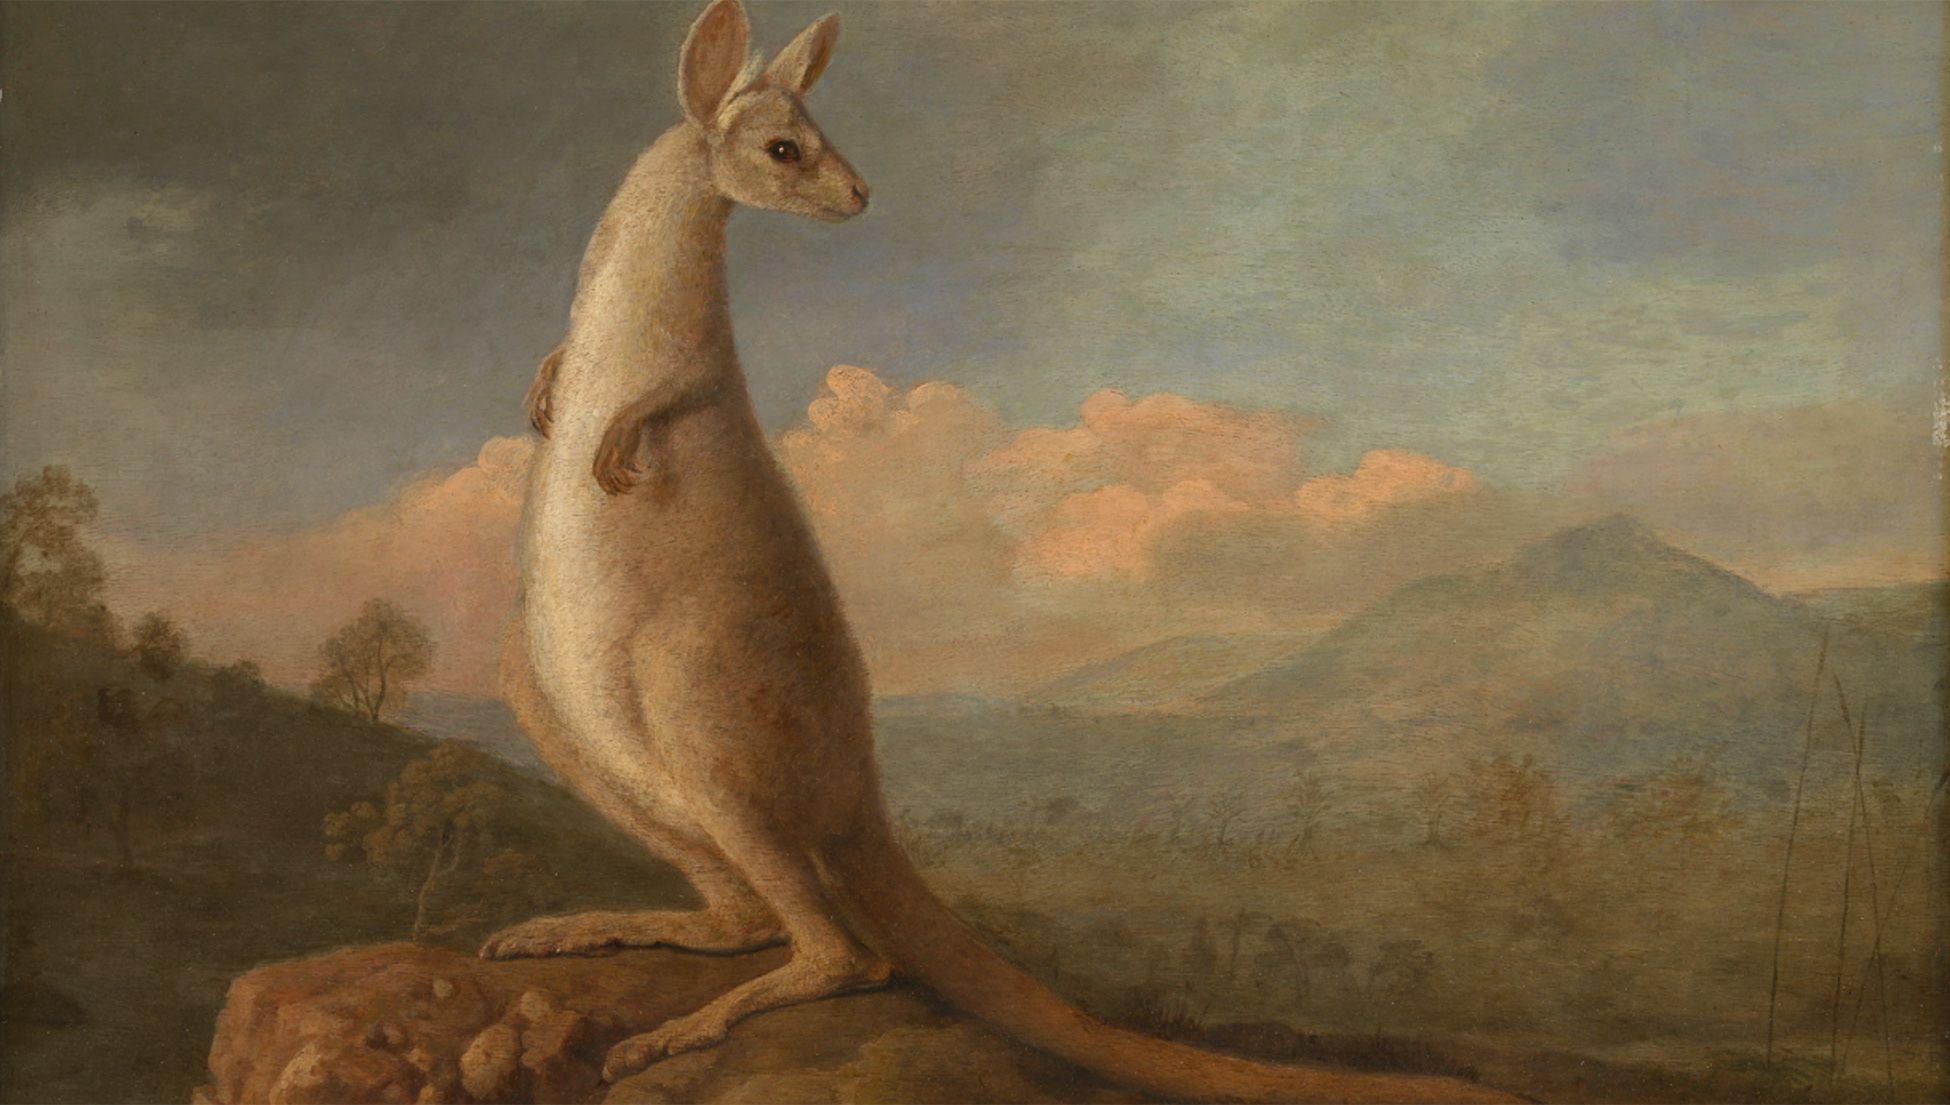 Calling Australia’s wildlife ‘weird’ puts it at risk | Psyche